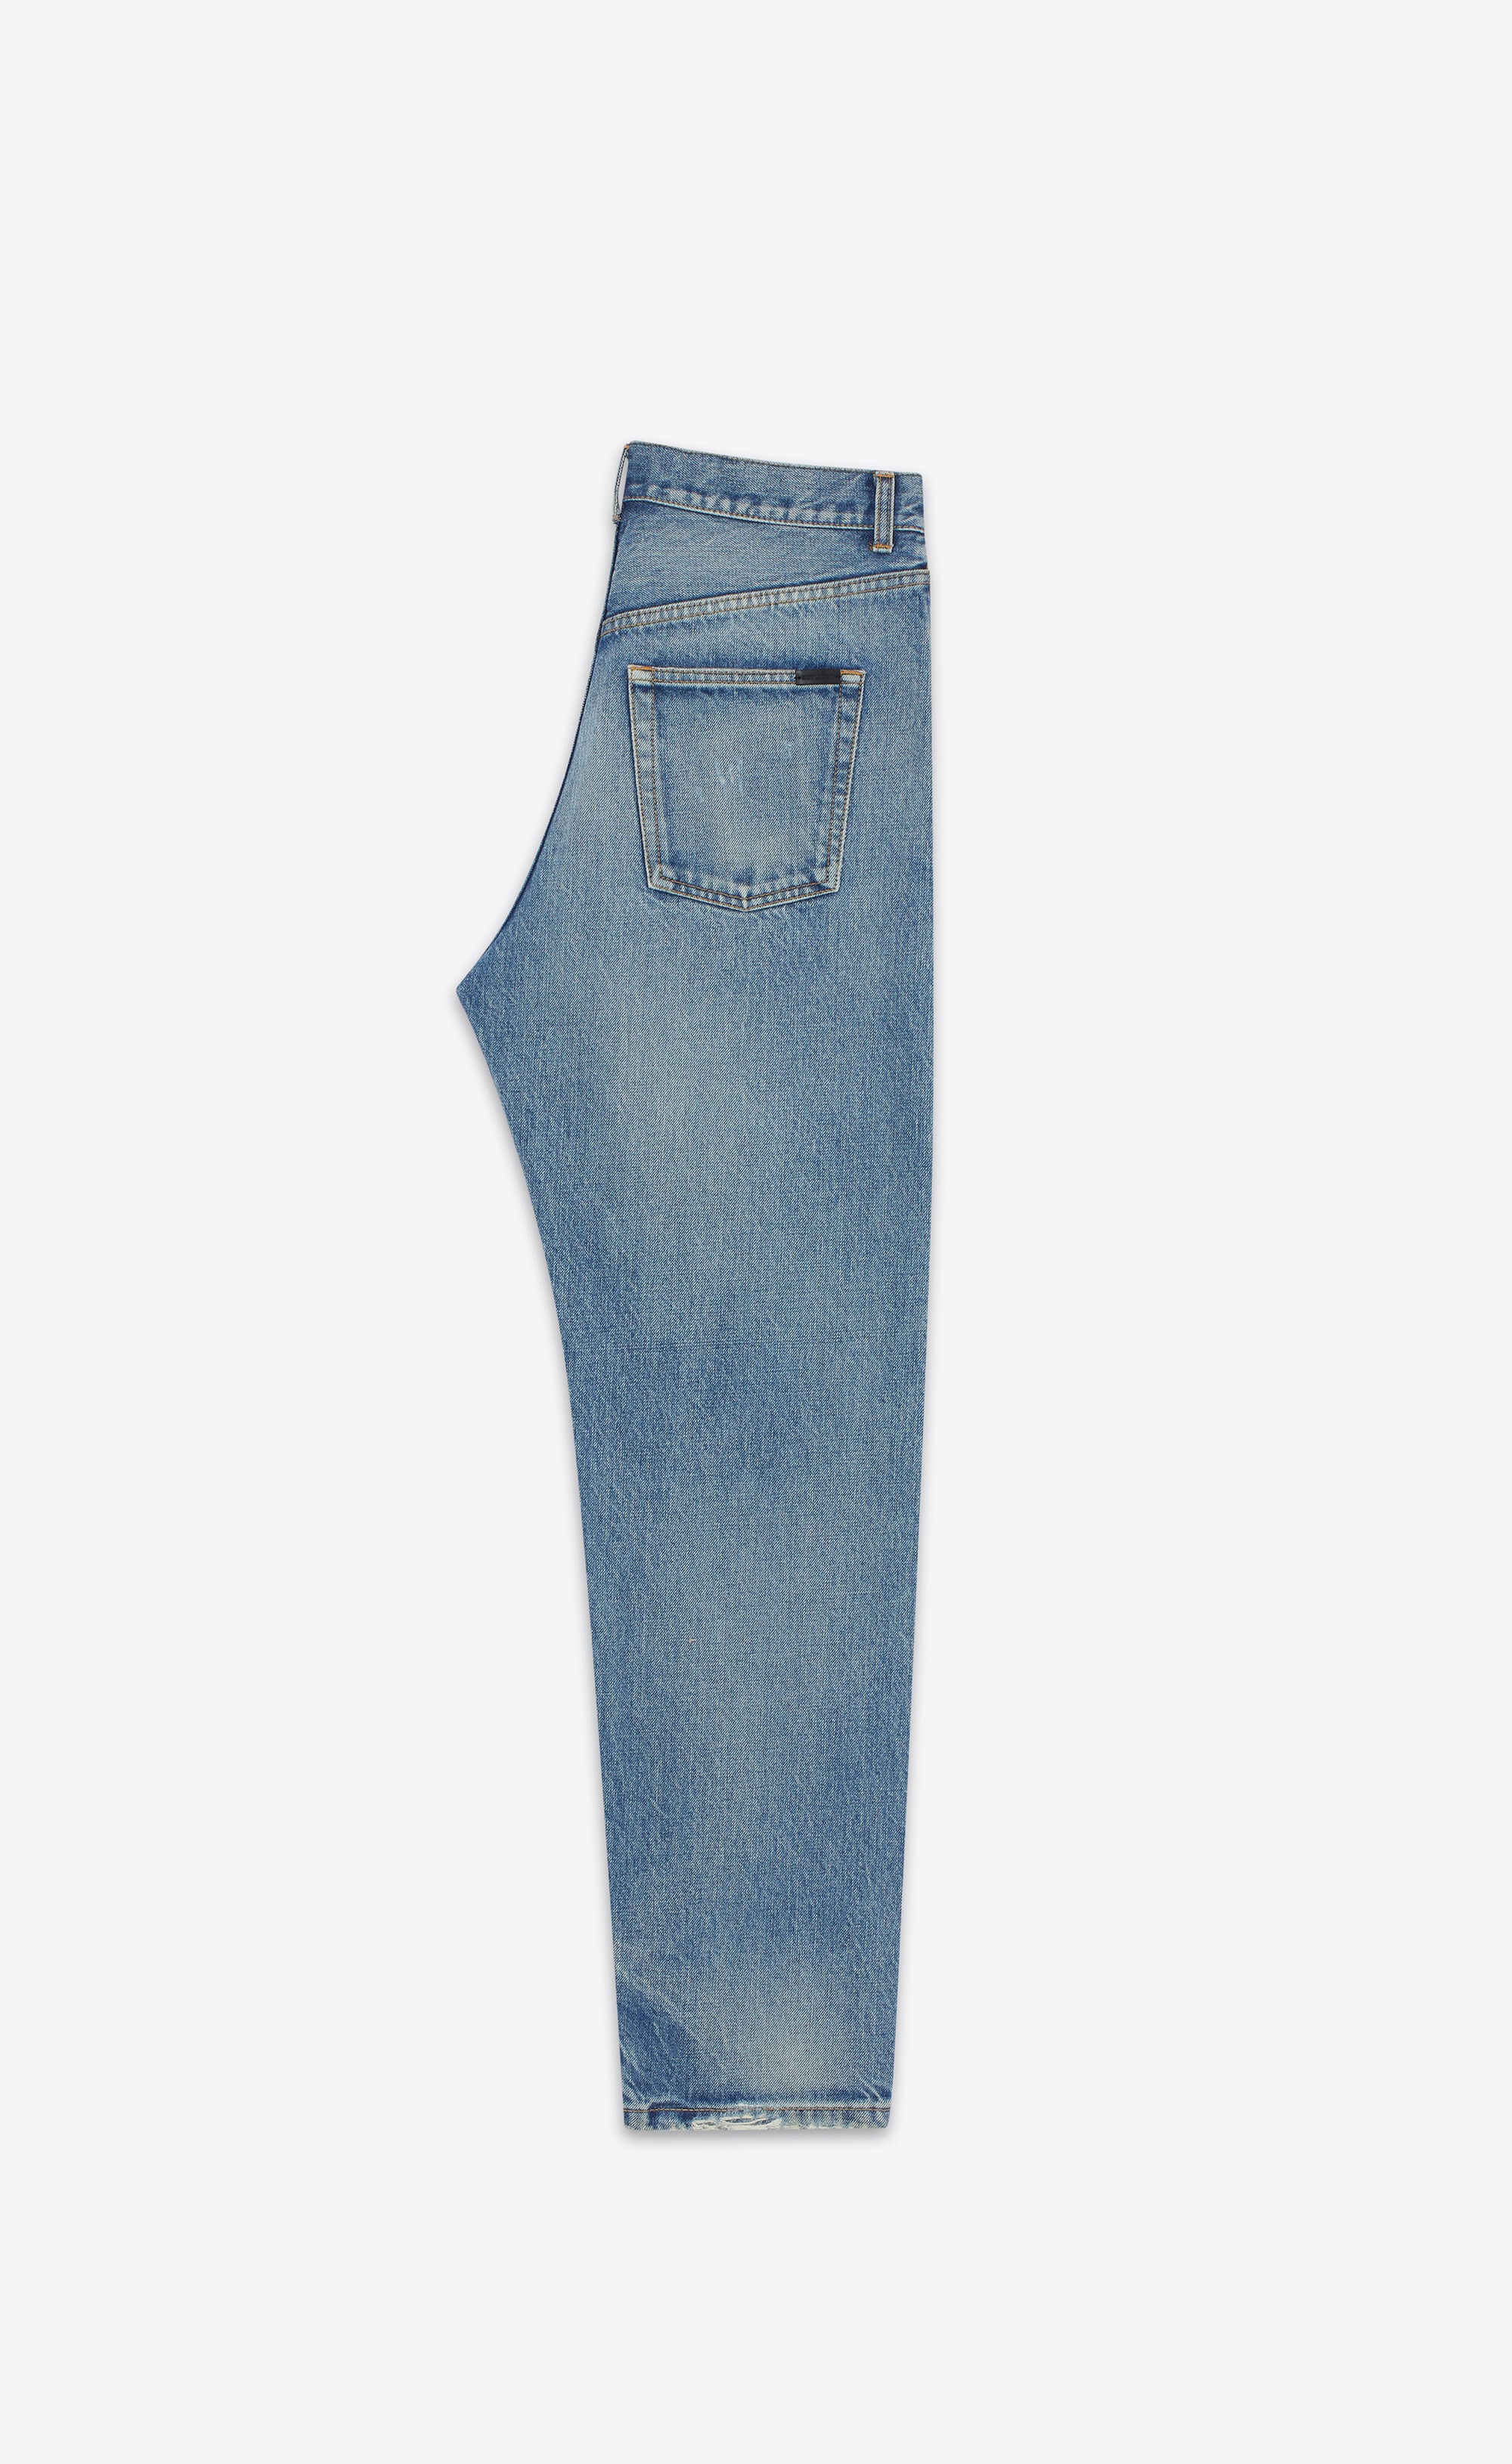 vanessa jeans in charlotte blue denim - 2